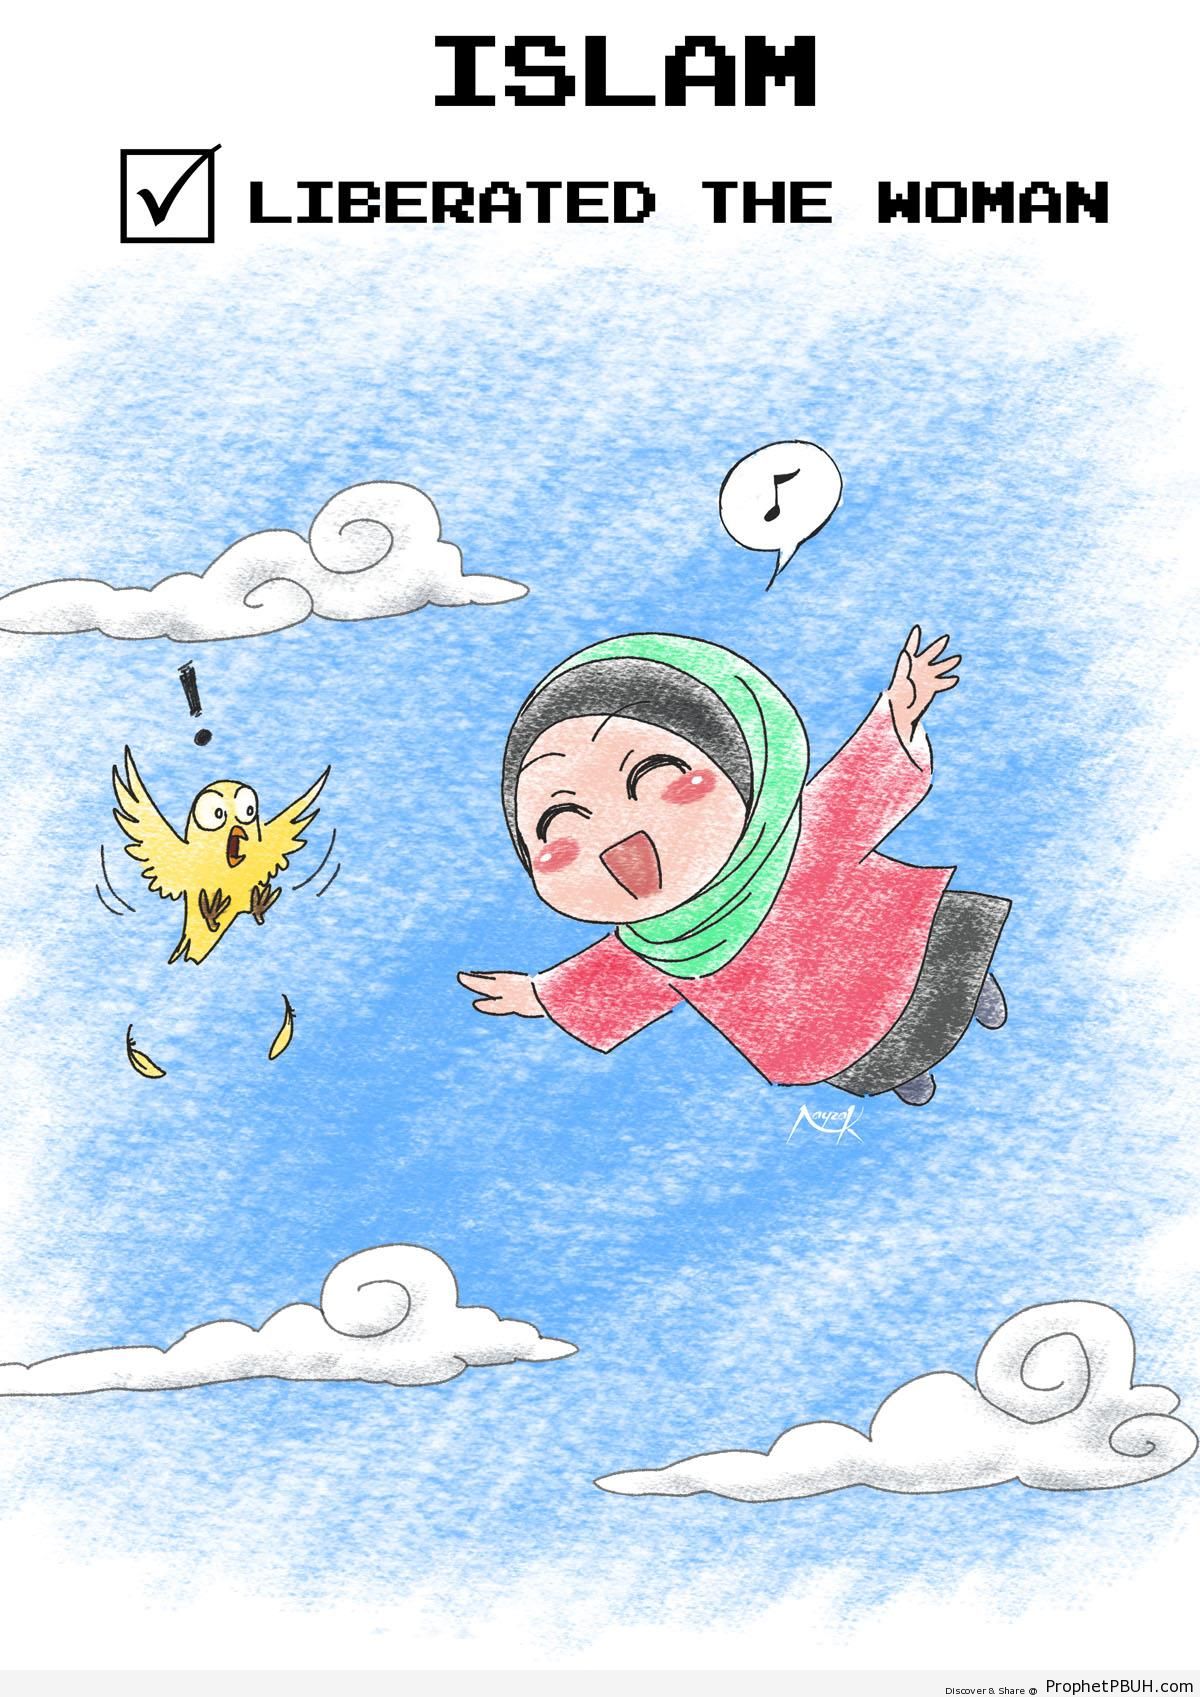 Islam Liberated the Woman (Poster With Happy Chibi Muslimah Drawing) - Chibi Drawings (Cute Muslim Characters)